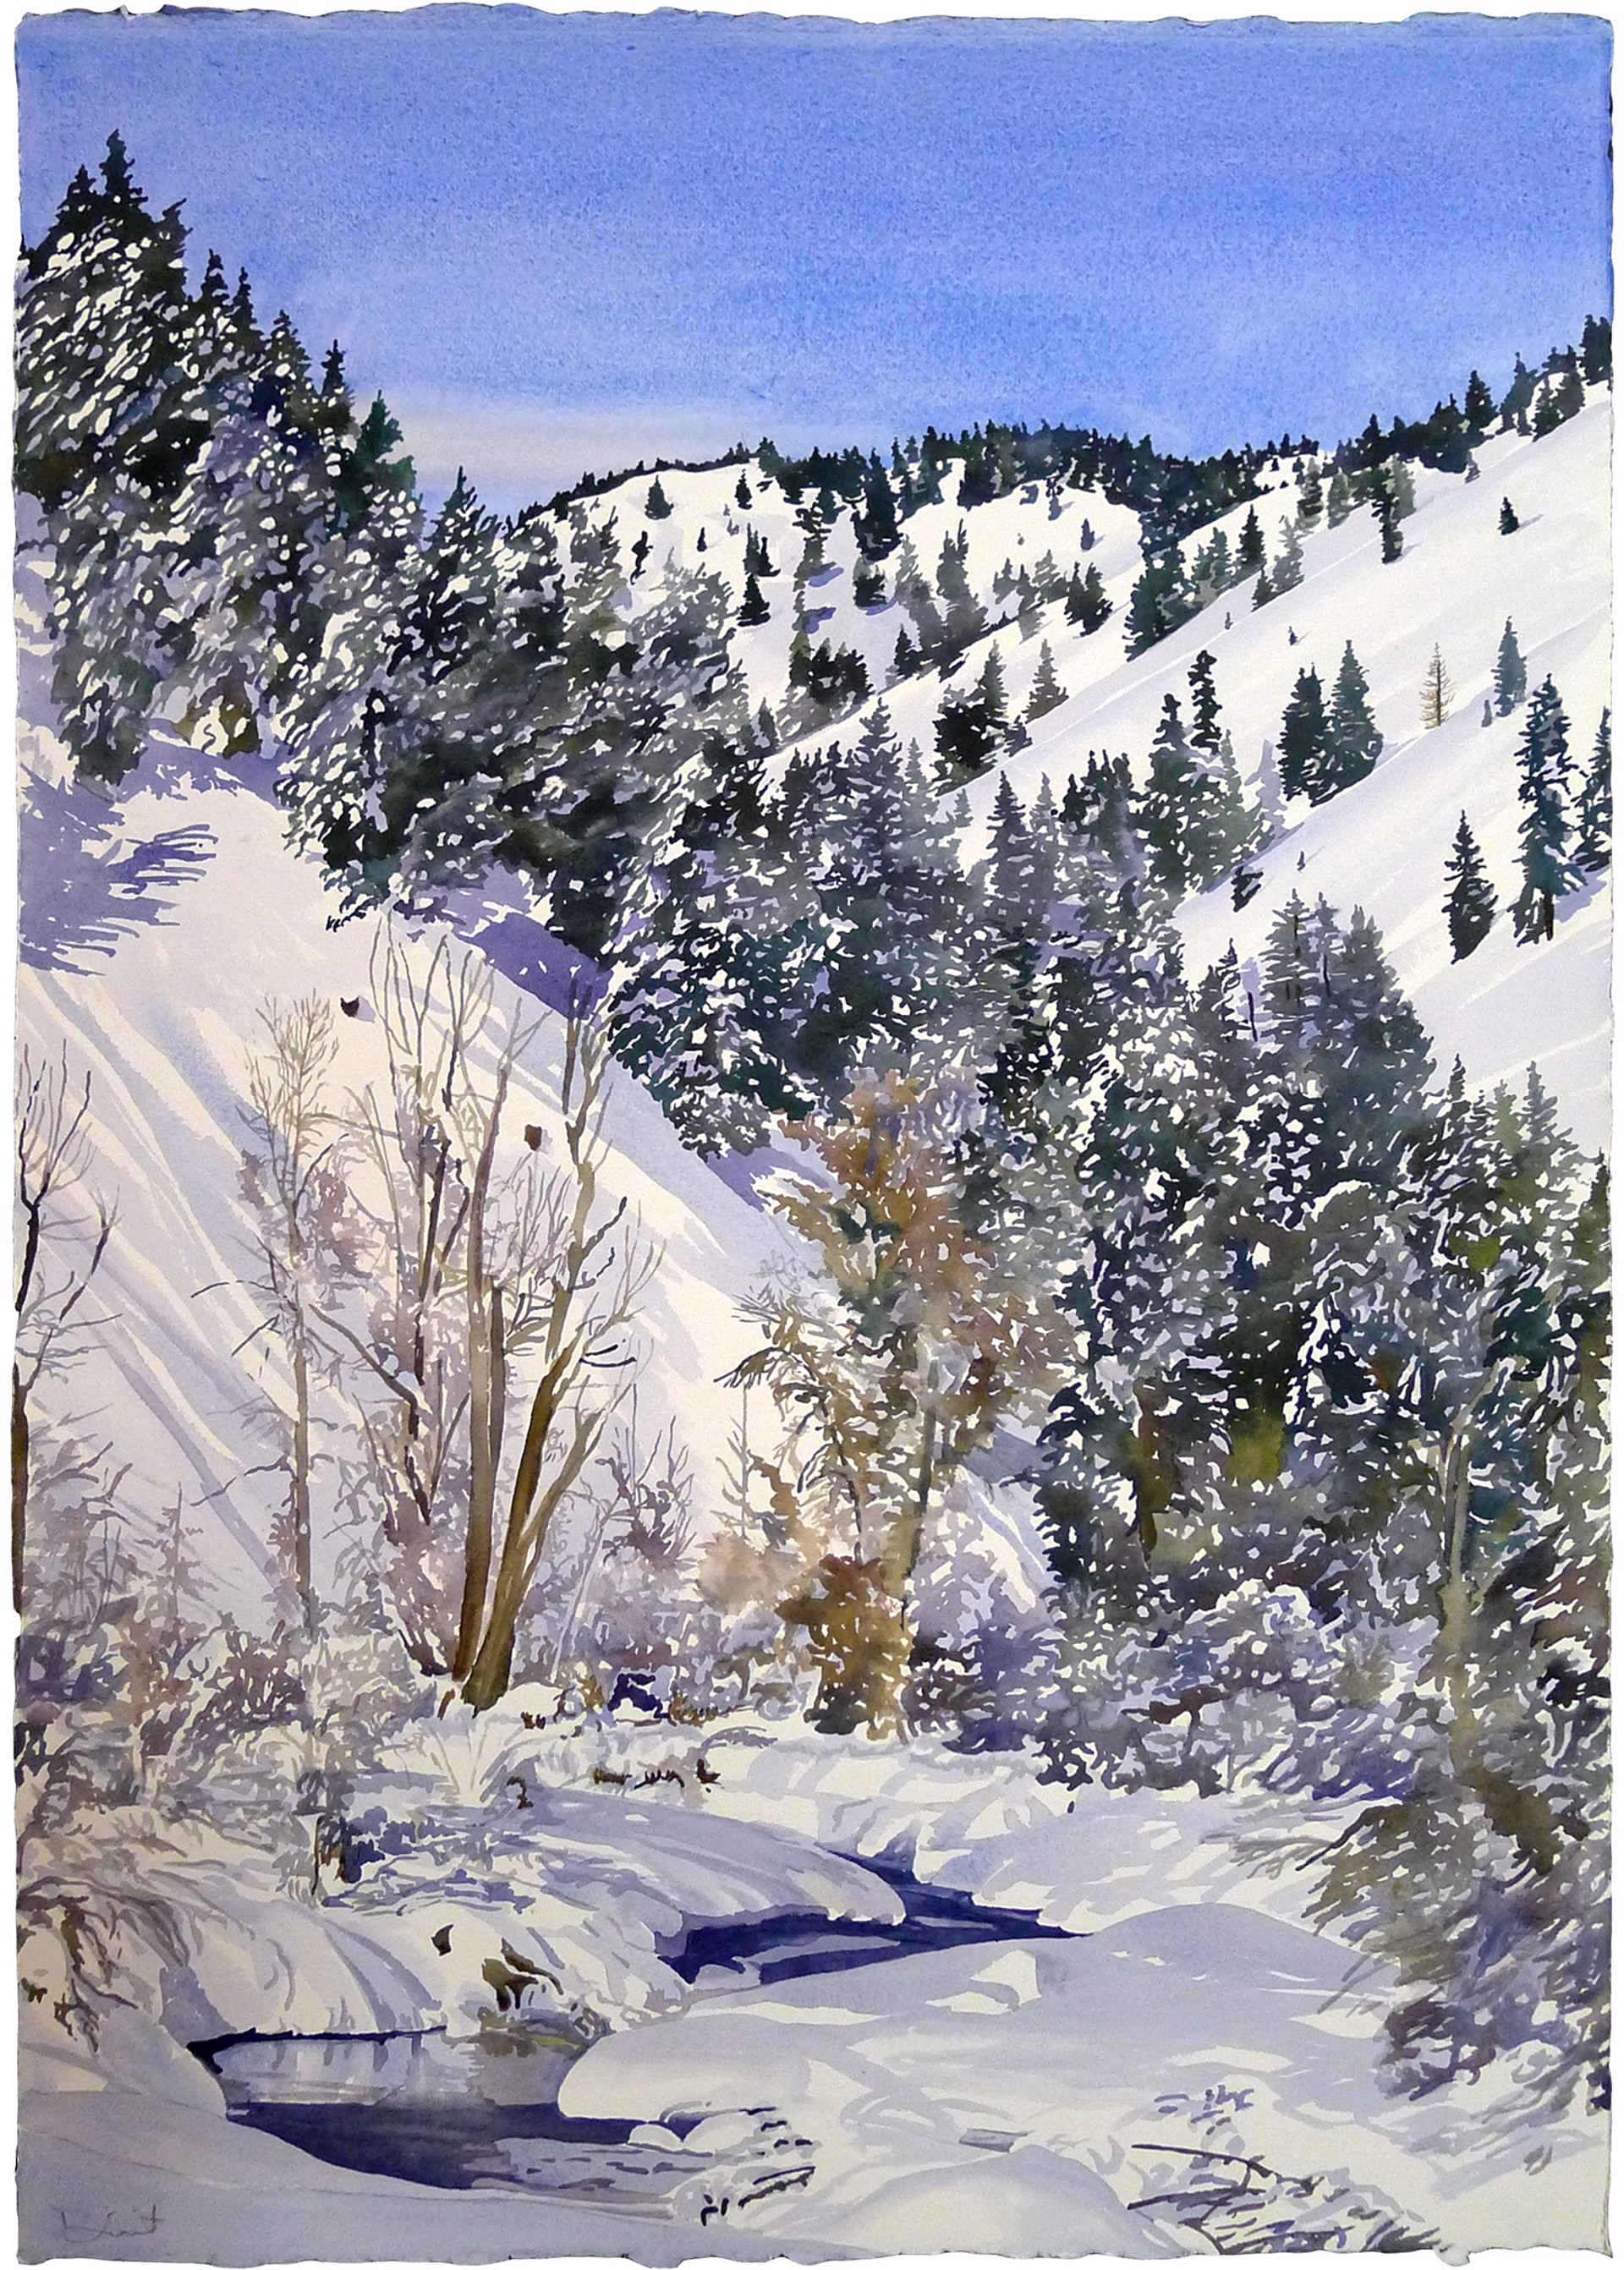 Warm Springs Creek Winter by Divit Cardoza